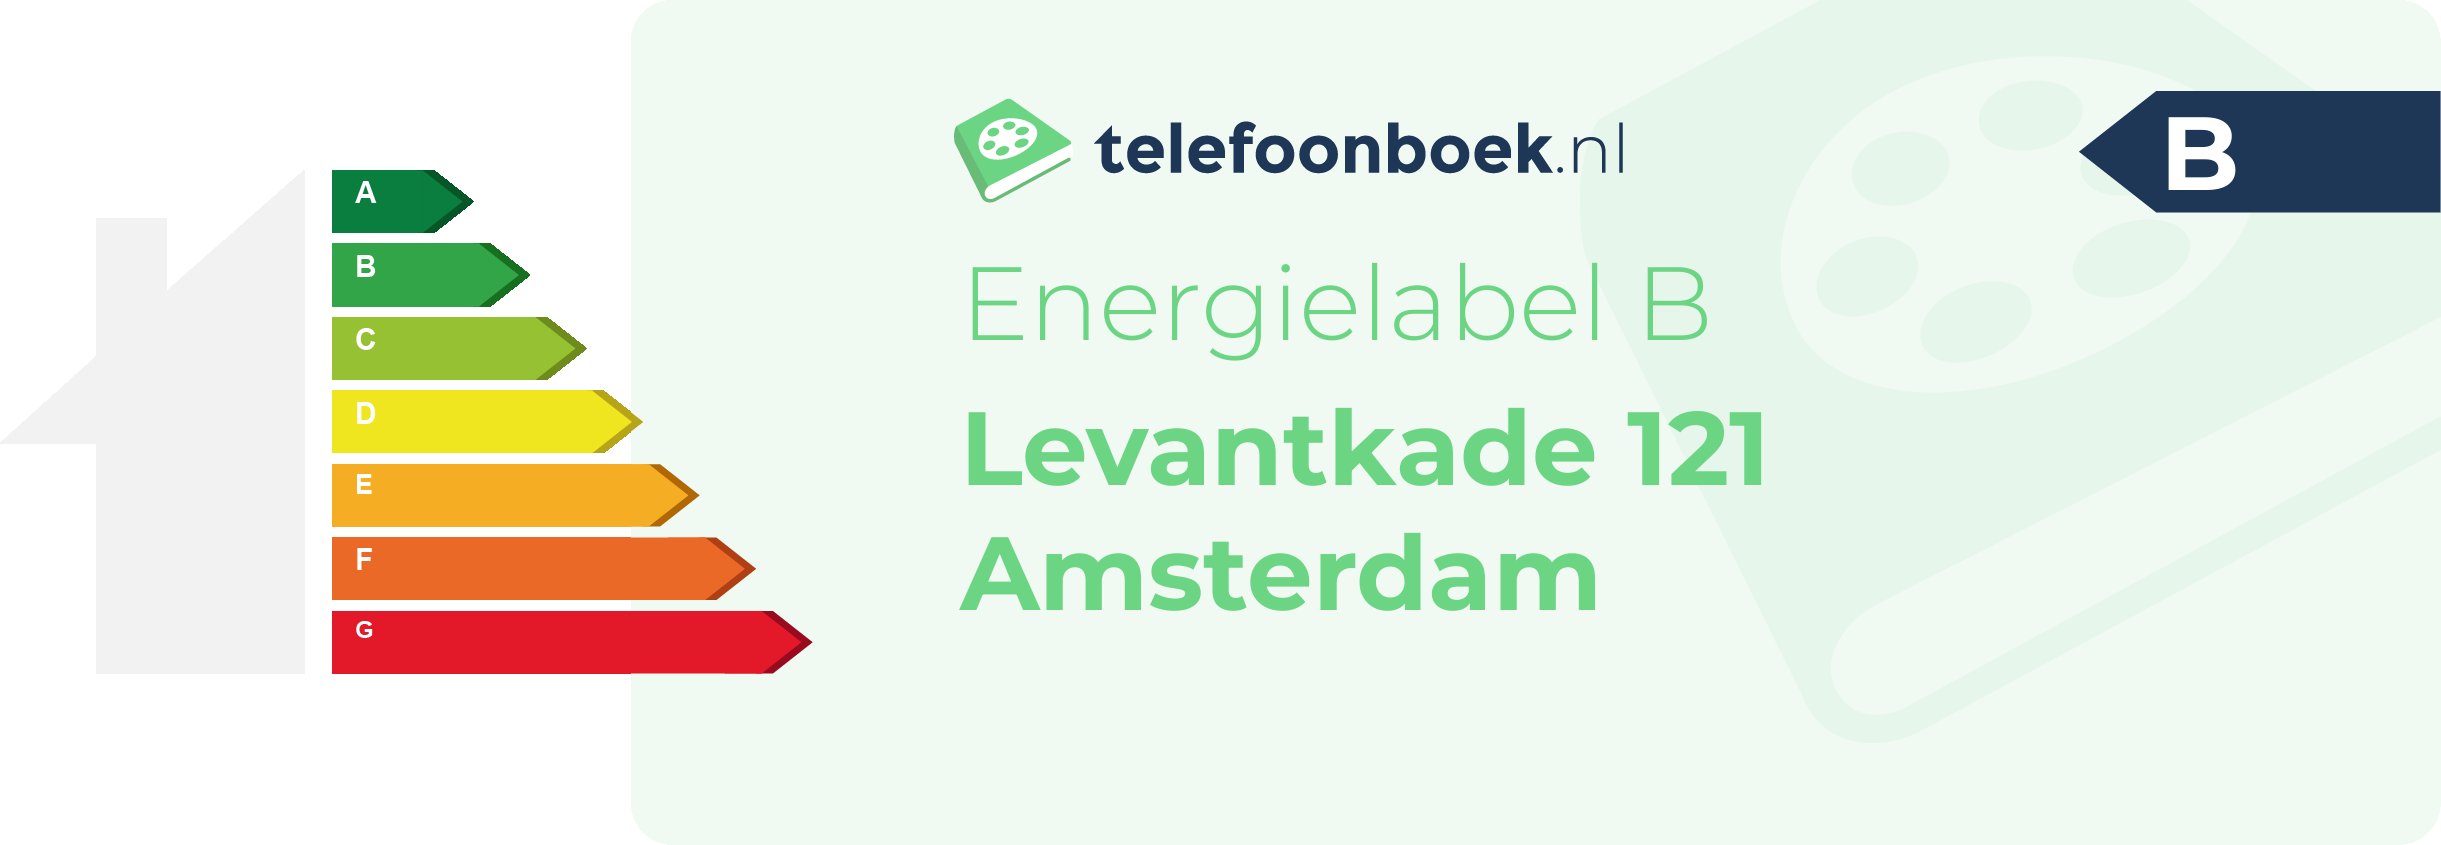 Energielabel Levantkade 121 Amsterdam